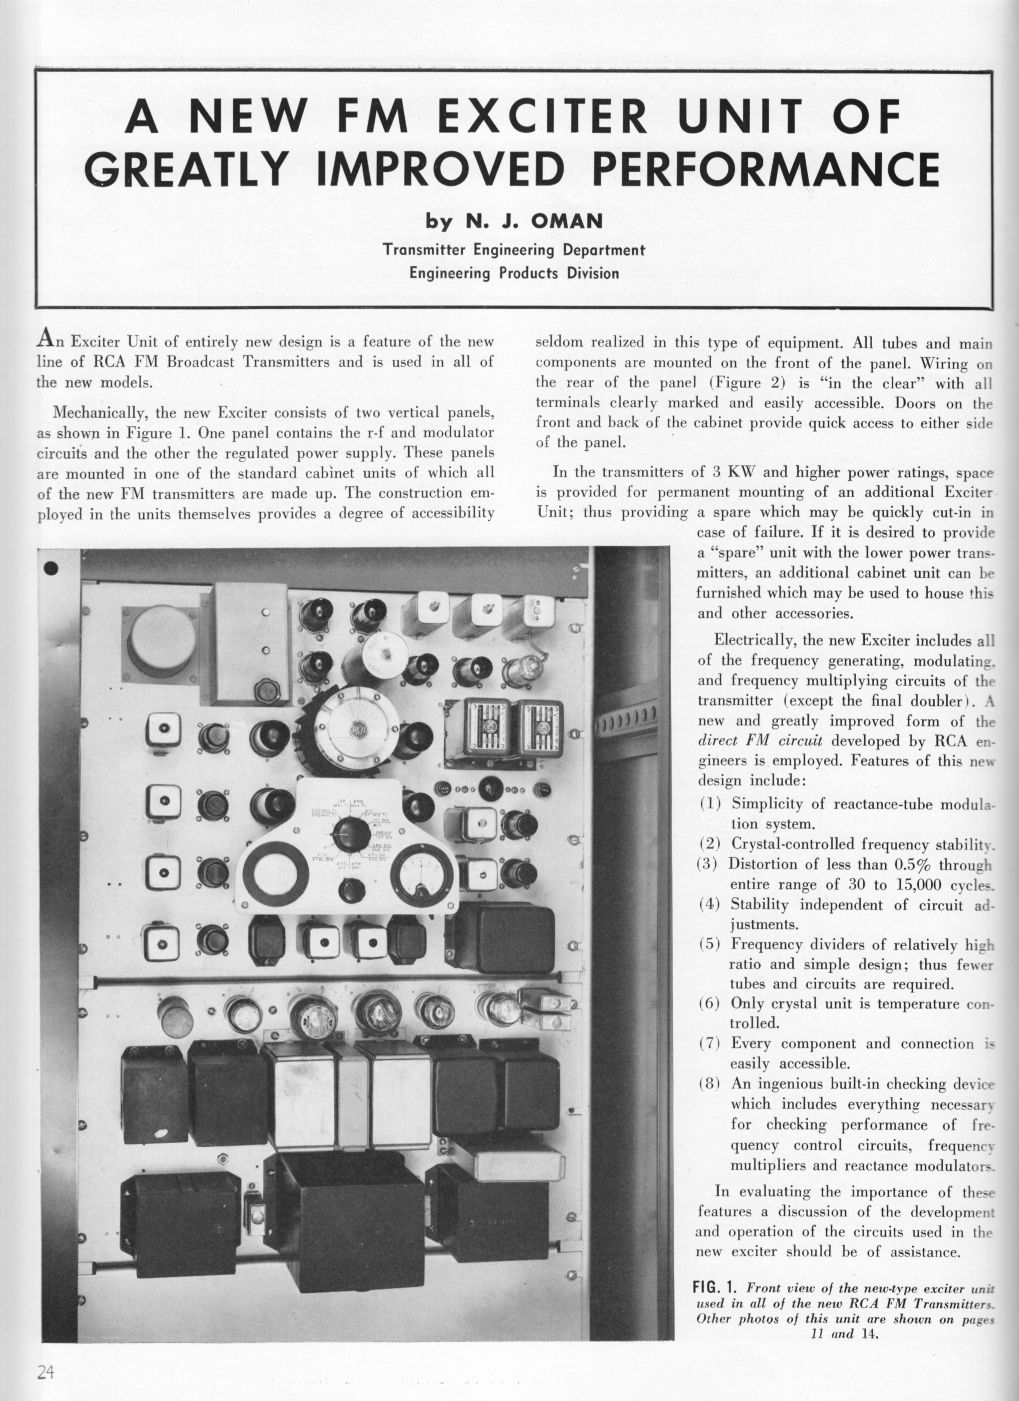 RCA MI-7015 Direct FM Exciter, page 1